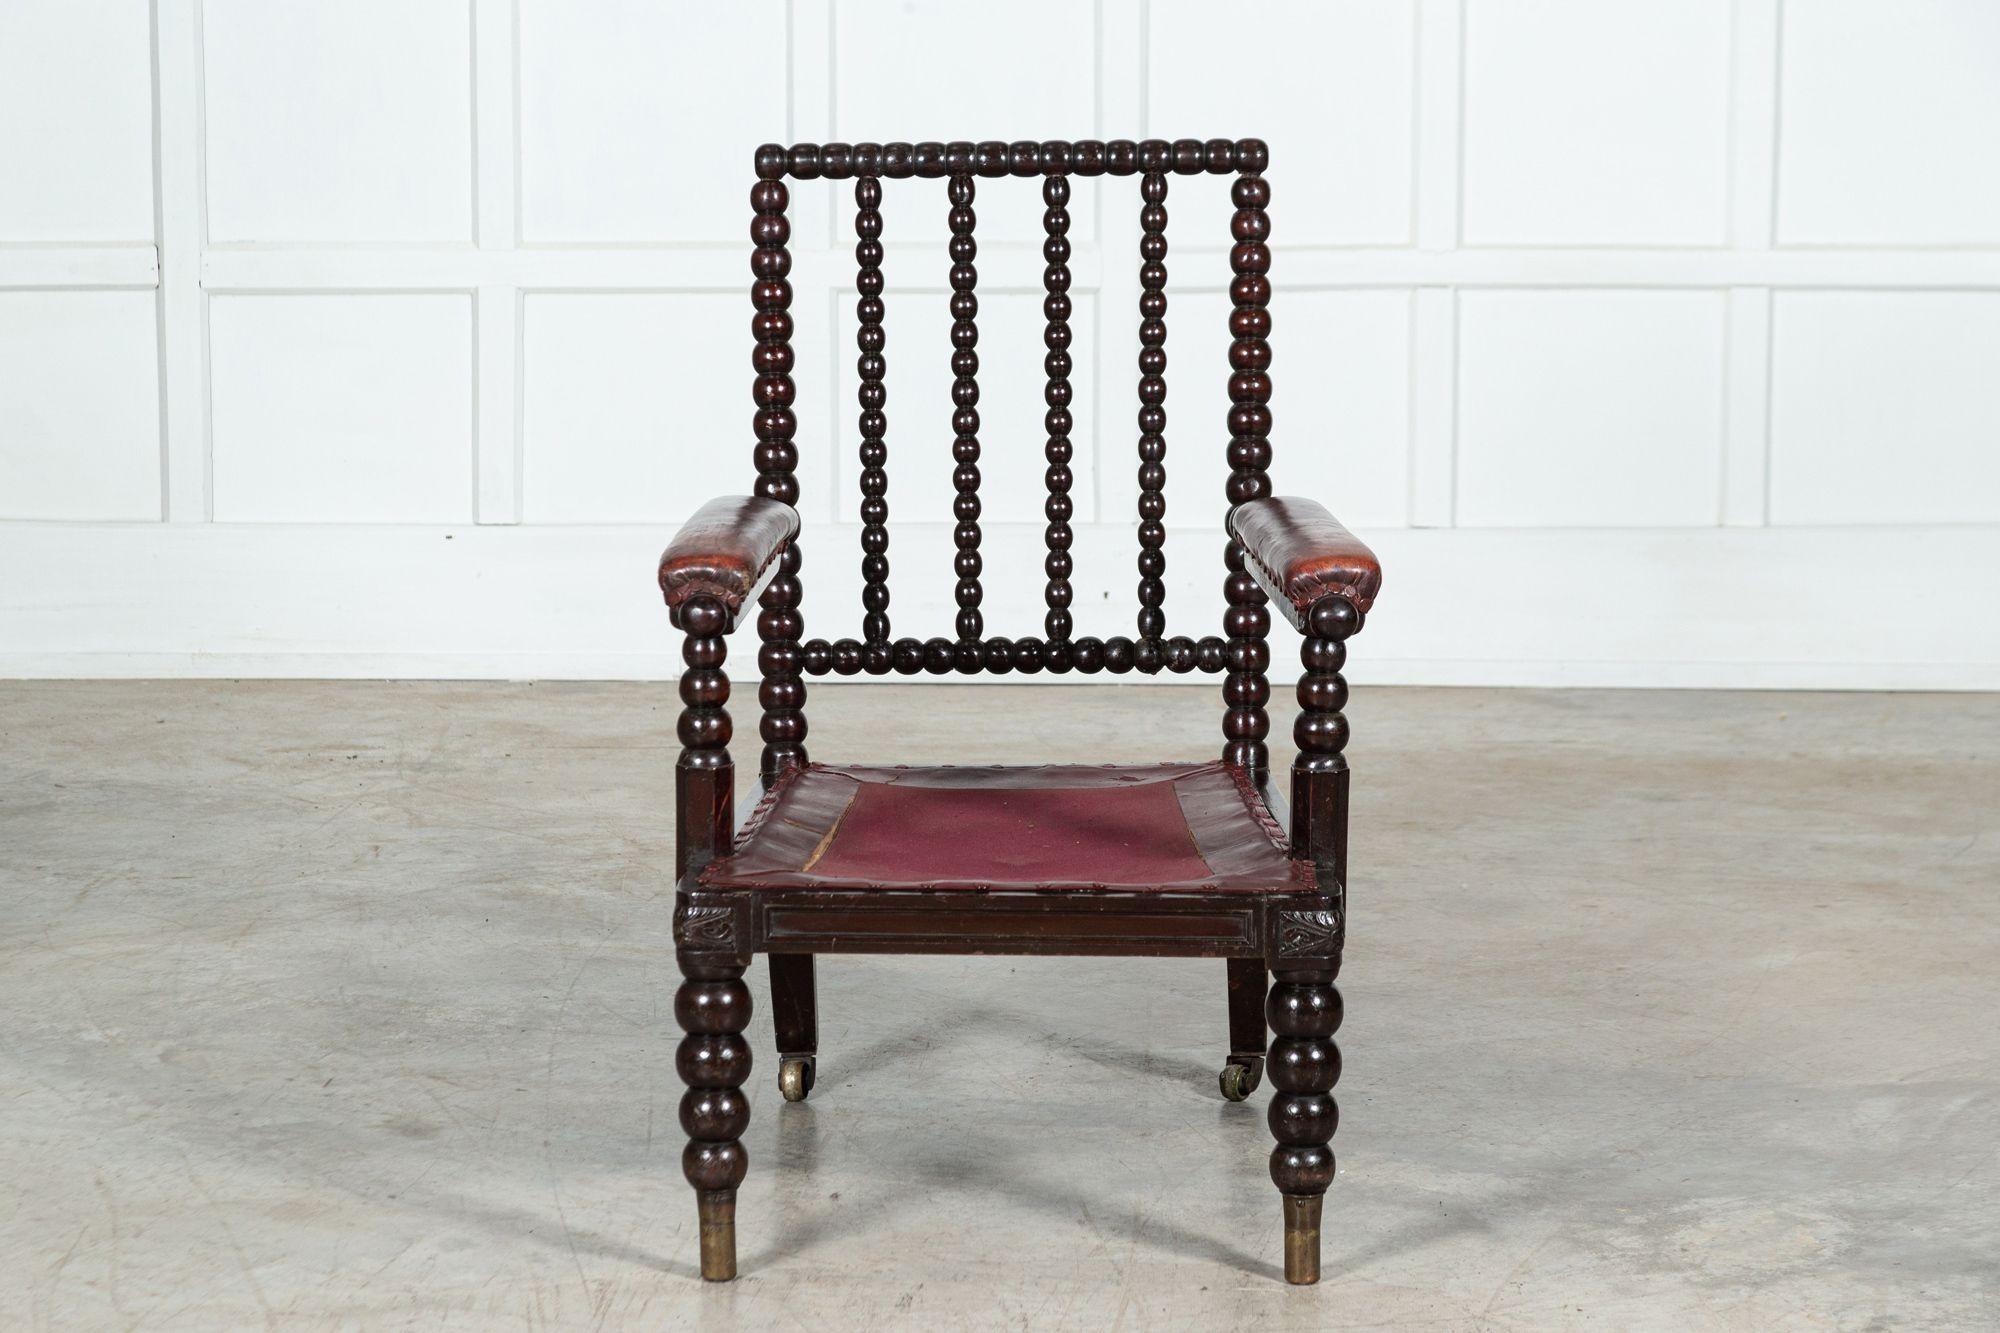 circa 1870
19th century Scottish Leather Bobbin Armchair
(signs of past repair)
sku 1485
W58 x D64 x H93 cm
Seat height 46 cm